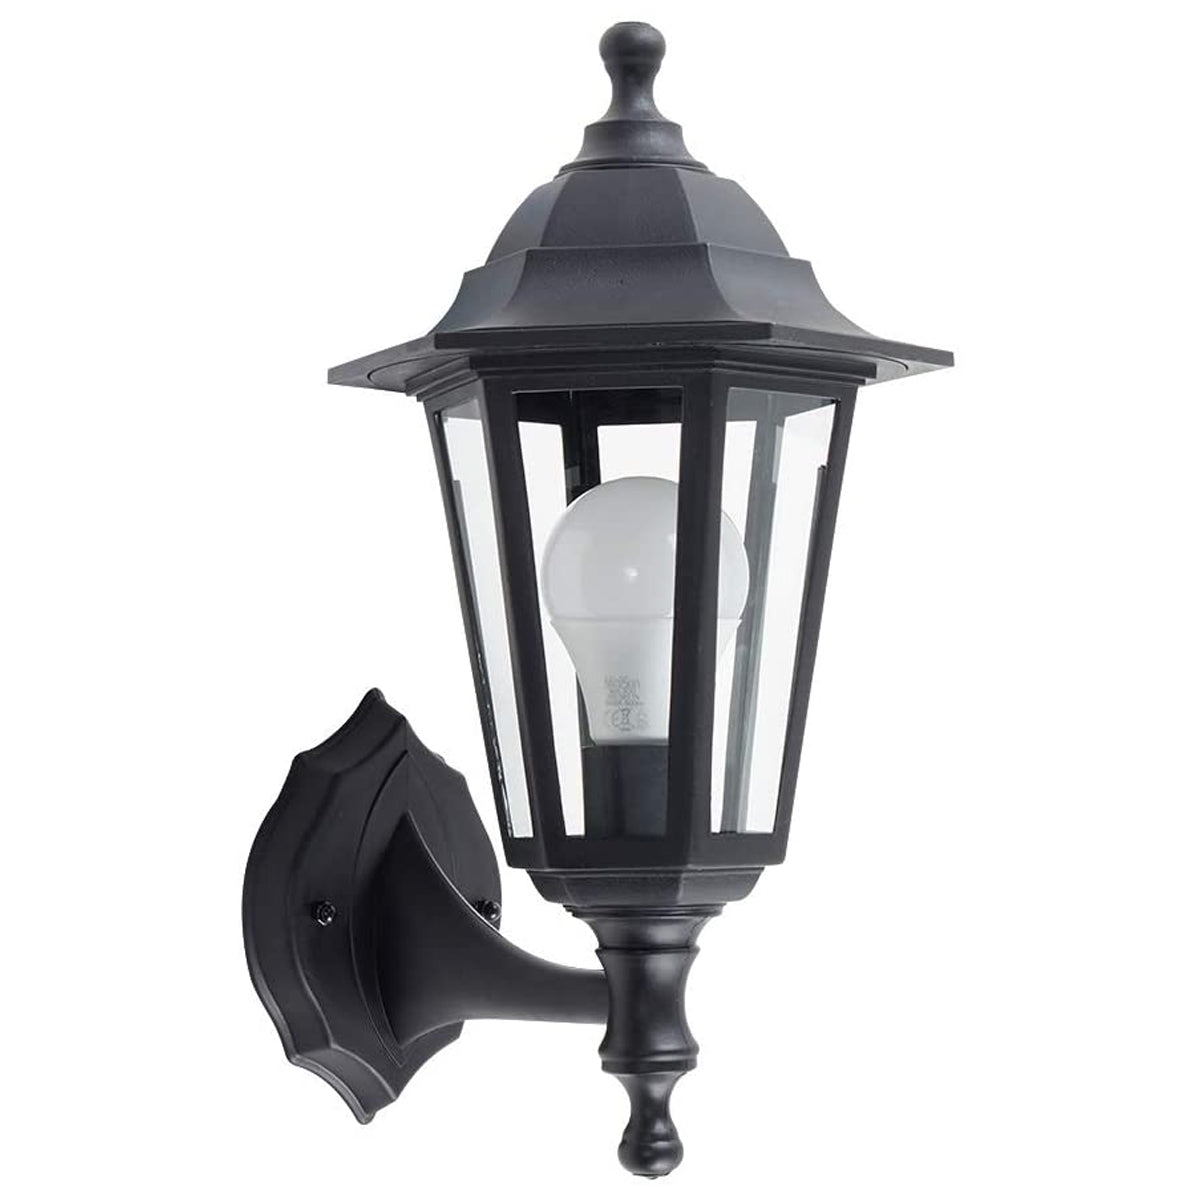 CGC YASMIN Black Outdoor Traditional Lantern Style Wall Light